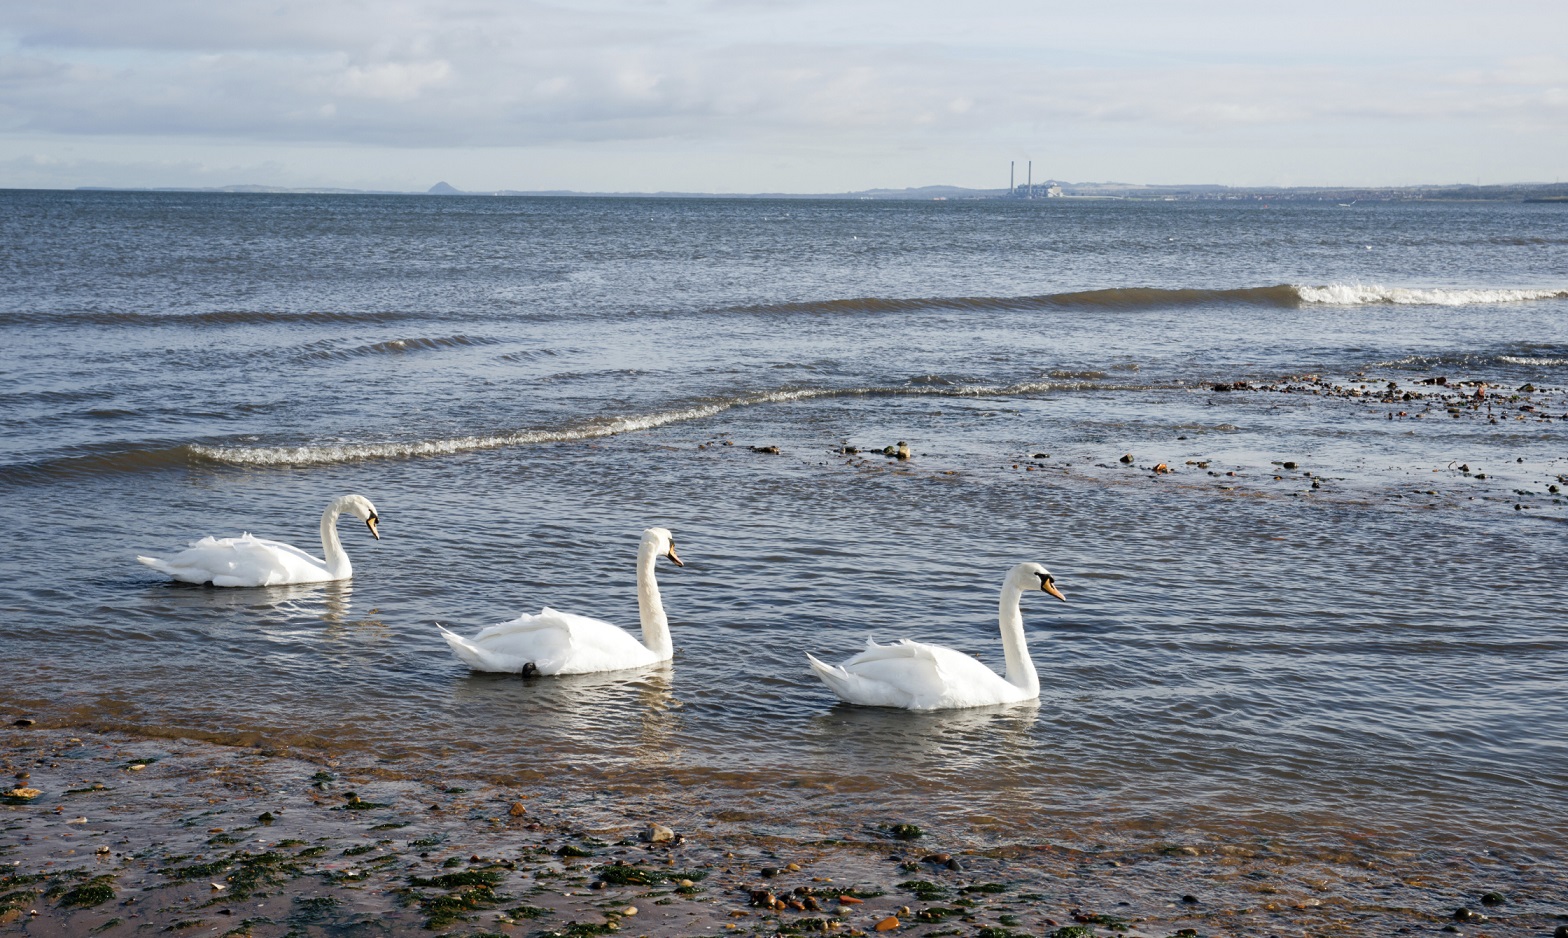 Three swans swimming on the sea